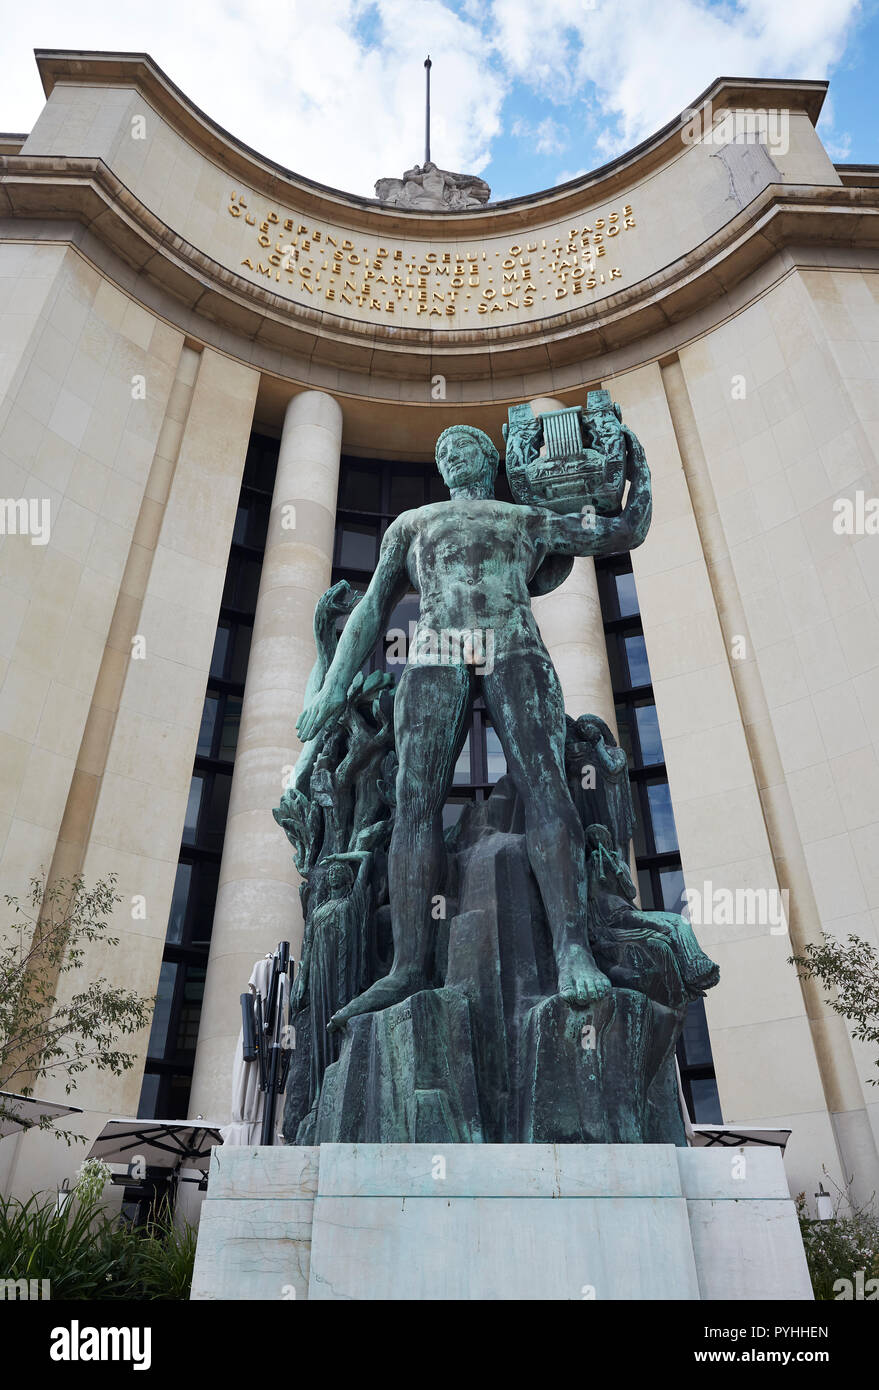 Paris, Ile-de-France, France - Bronze statue in front of the eastern part of the Palais de Chaillot. Stock Photo